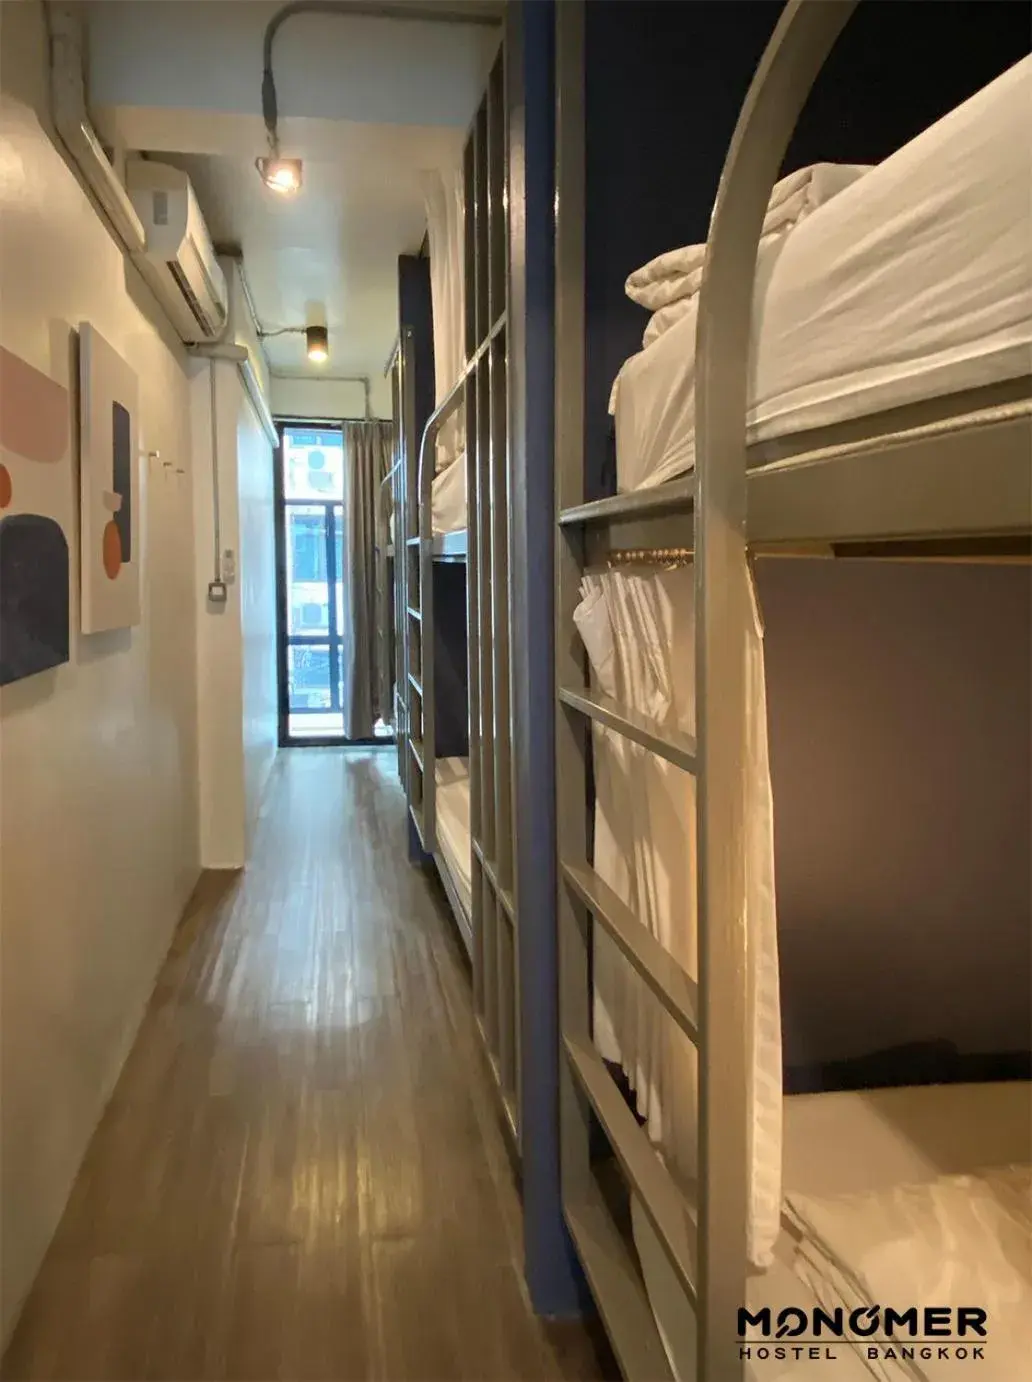 Bunk Bed in Monomer Hostel